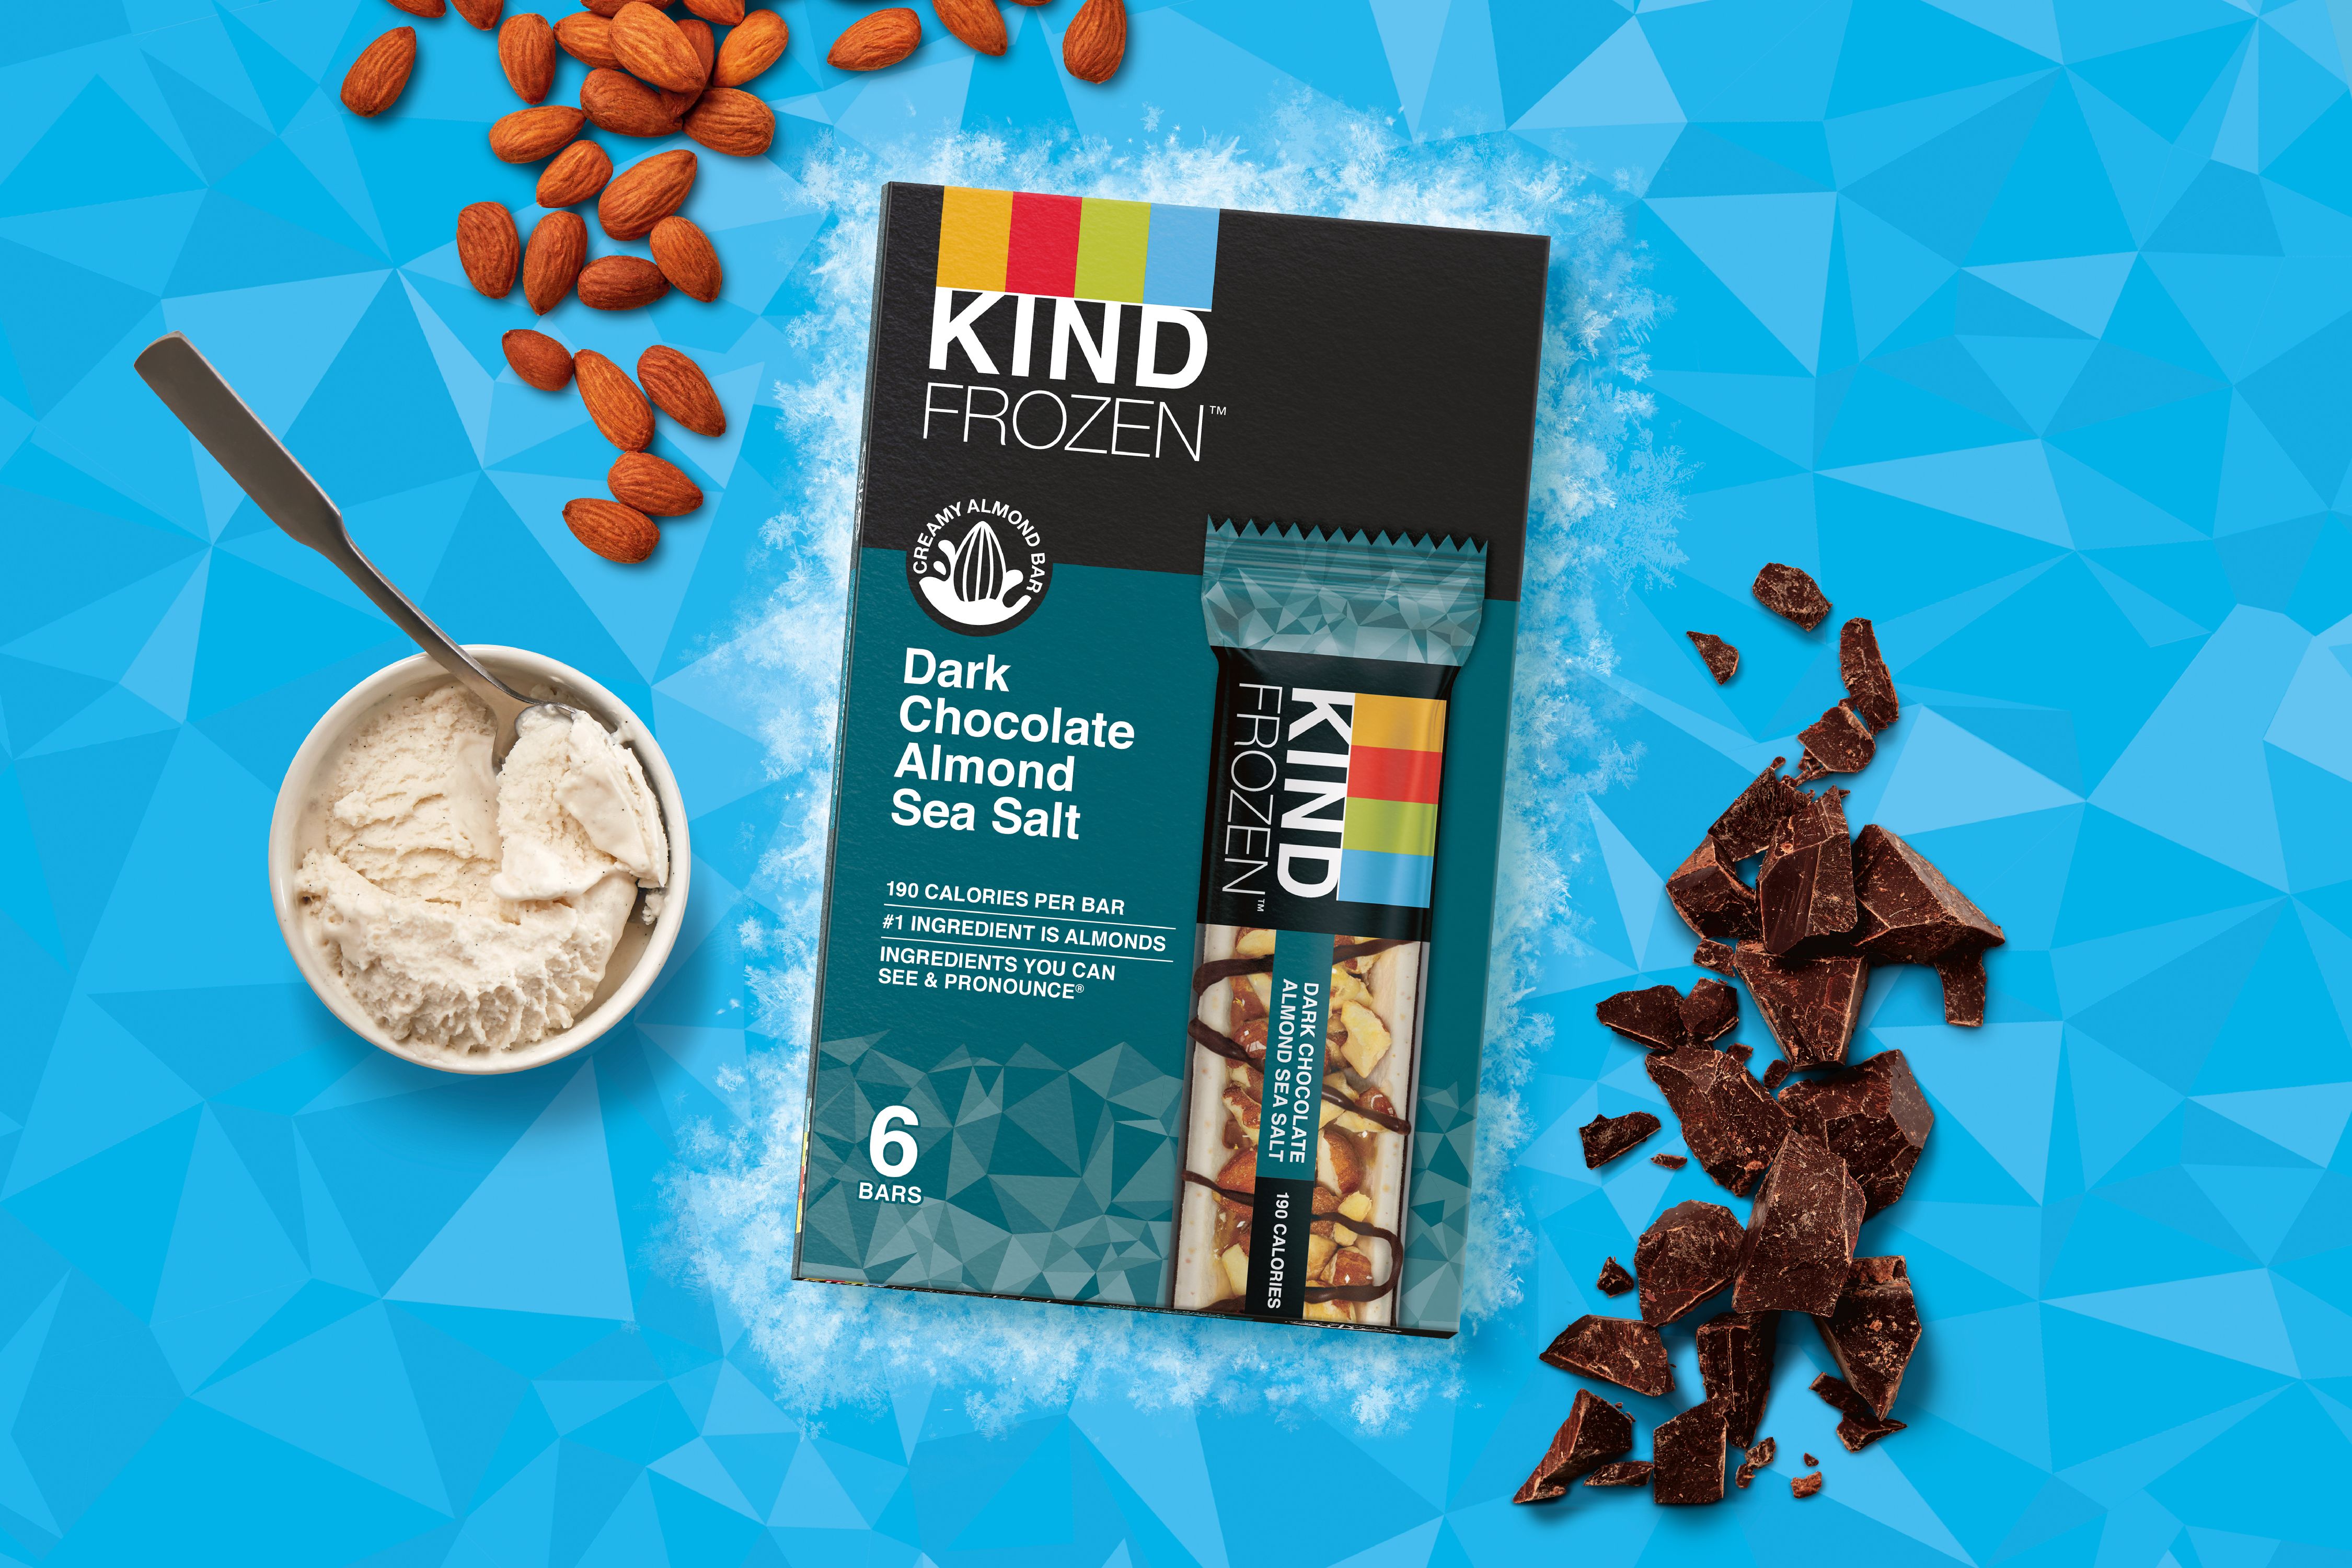 KIND FROZEN Dark Chocolate Almond Sea Salt Bars 6 Count Box - image 3 of 5